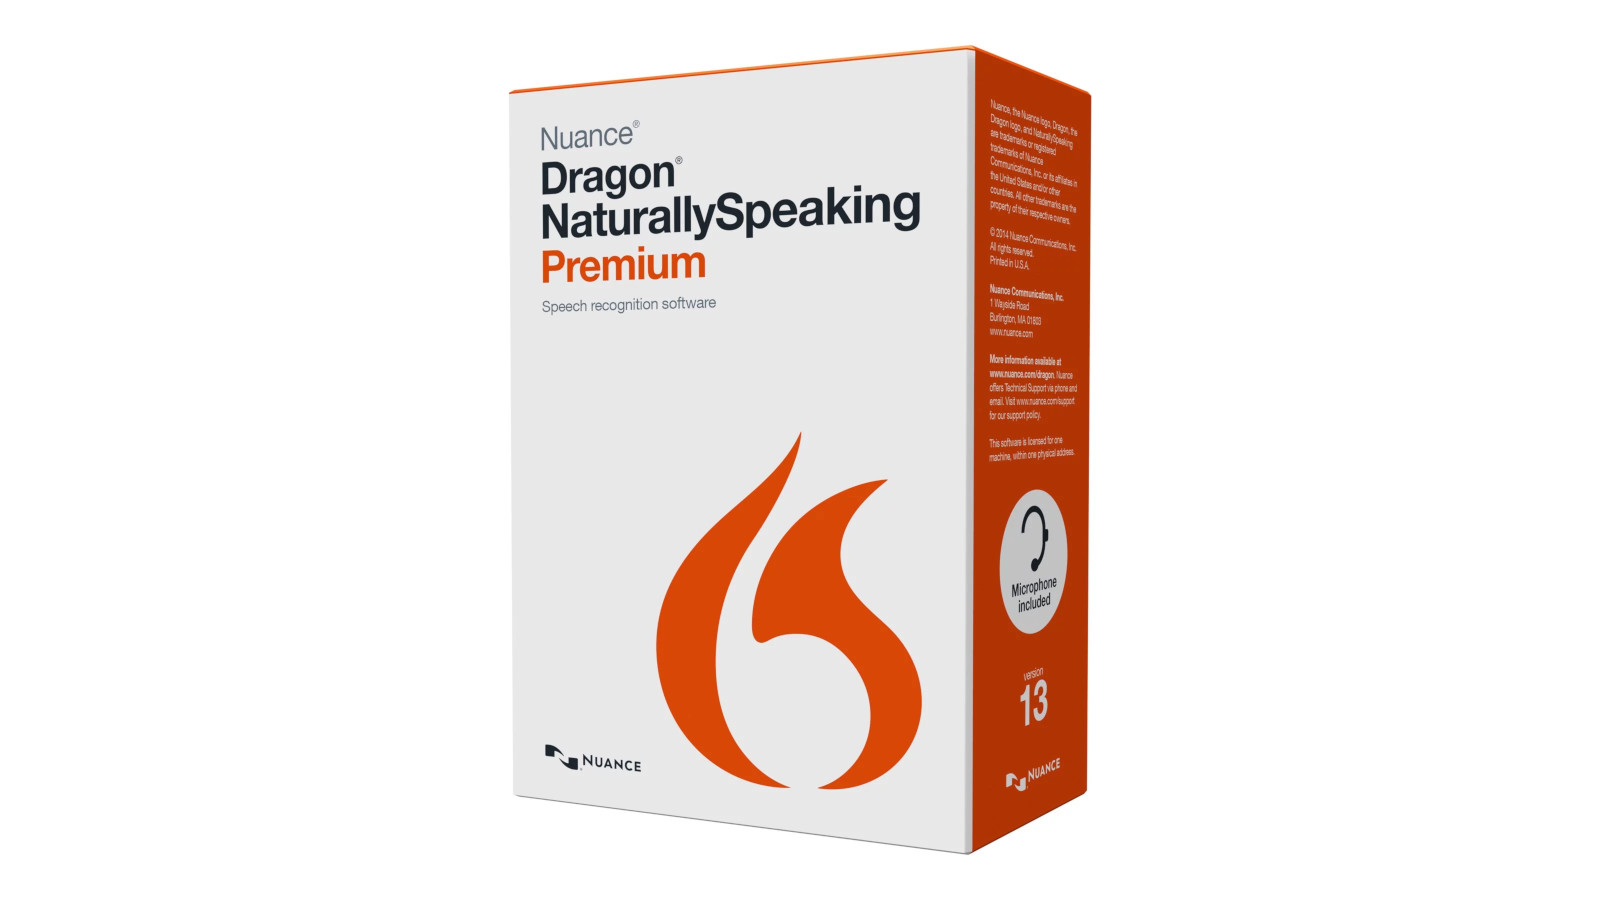 Nuance Dragon NaturallySpeaking Premium 13 Key (Lifetime / 1 PC) USD 13.73